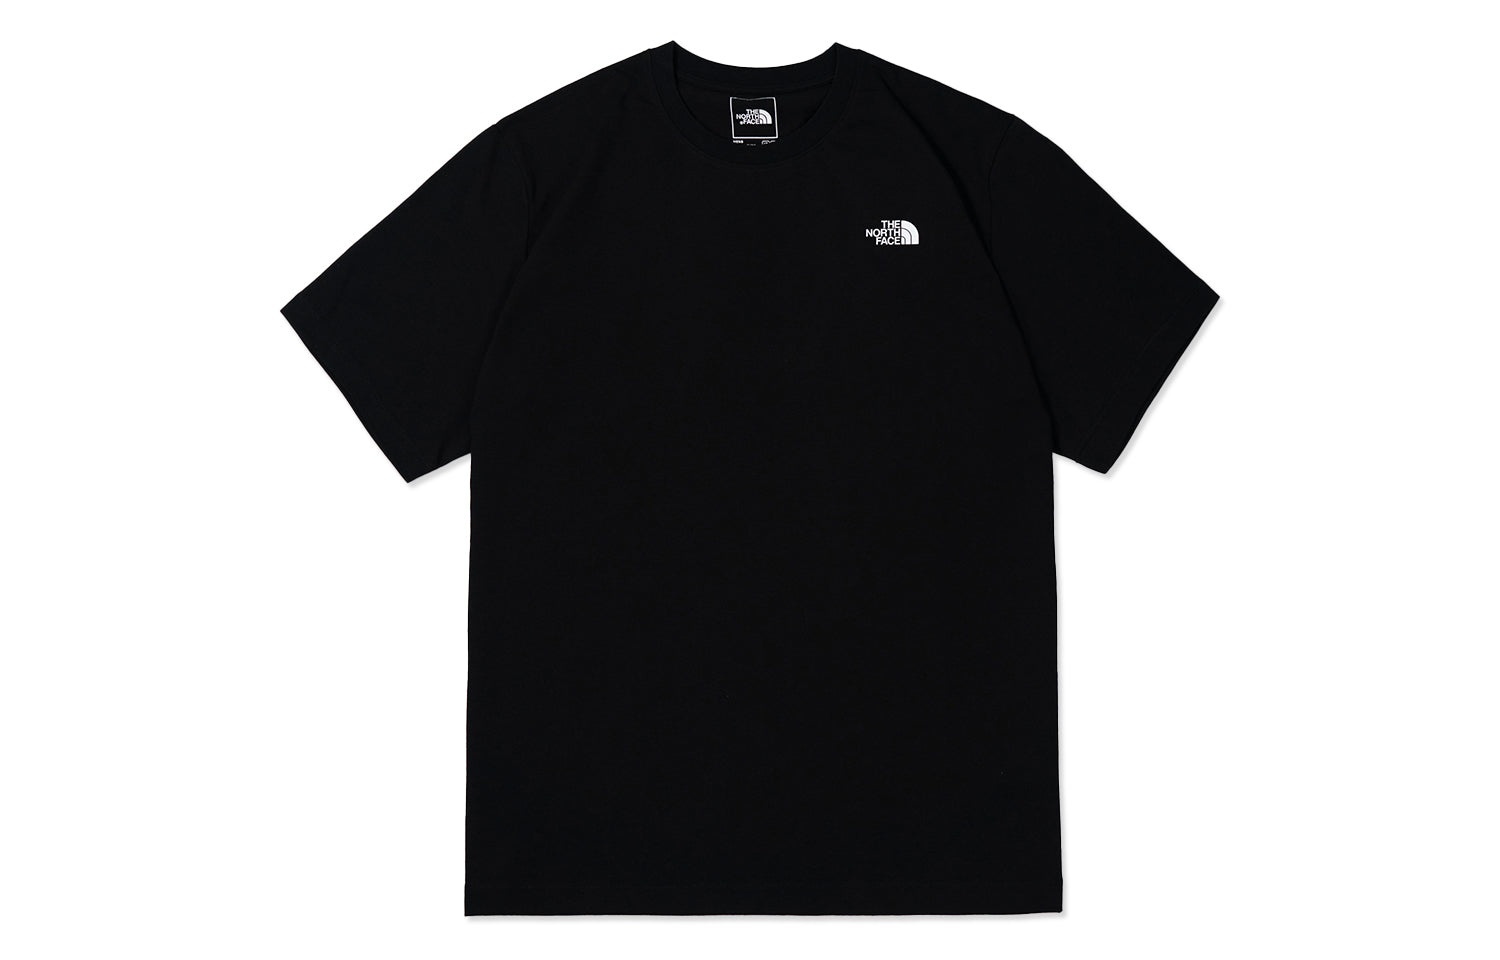 THE NORTH FACE Short Sleeve T-Shirt 'Black' NF0A88BQ-JK3 - 2